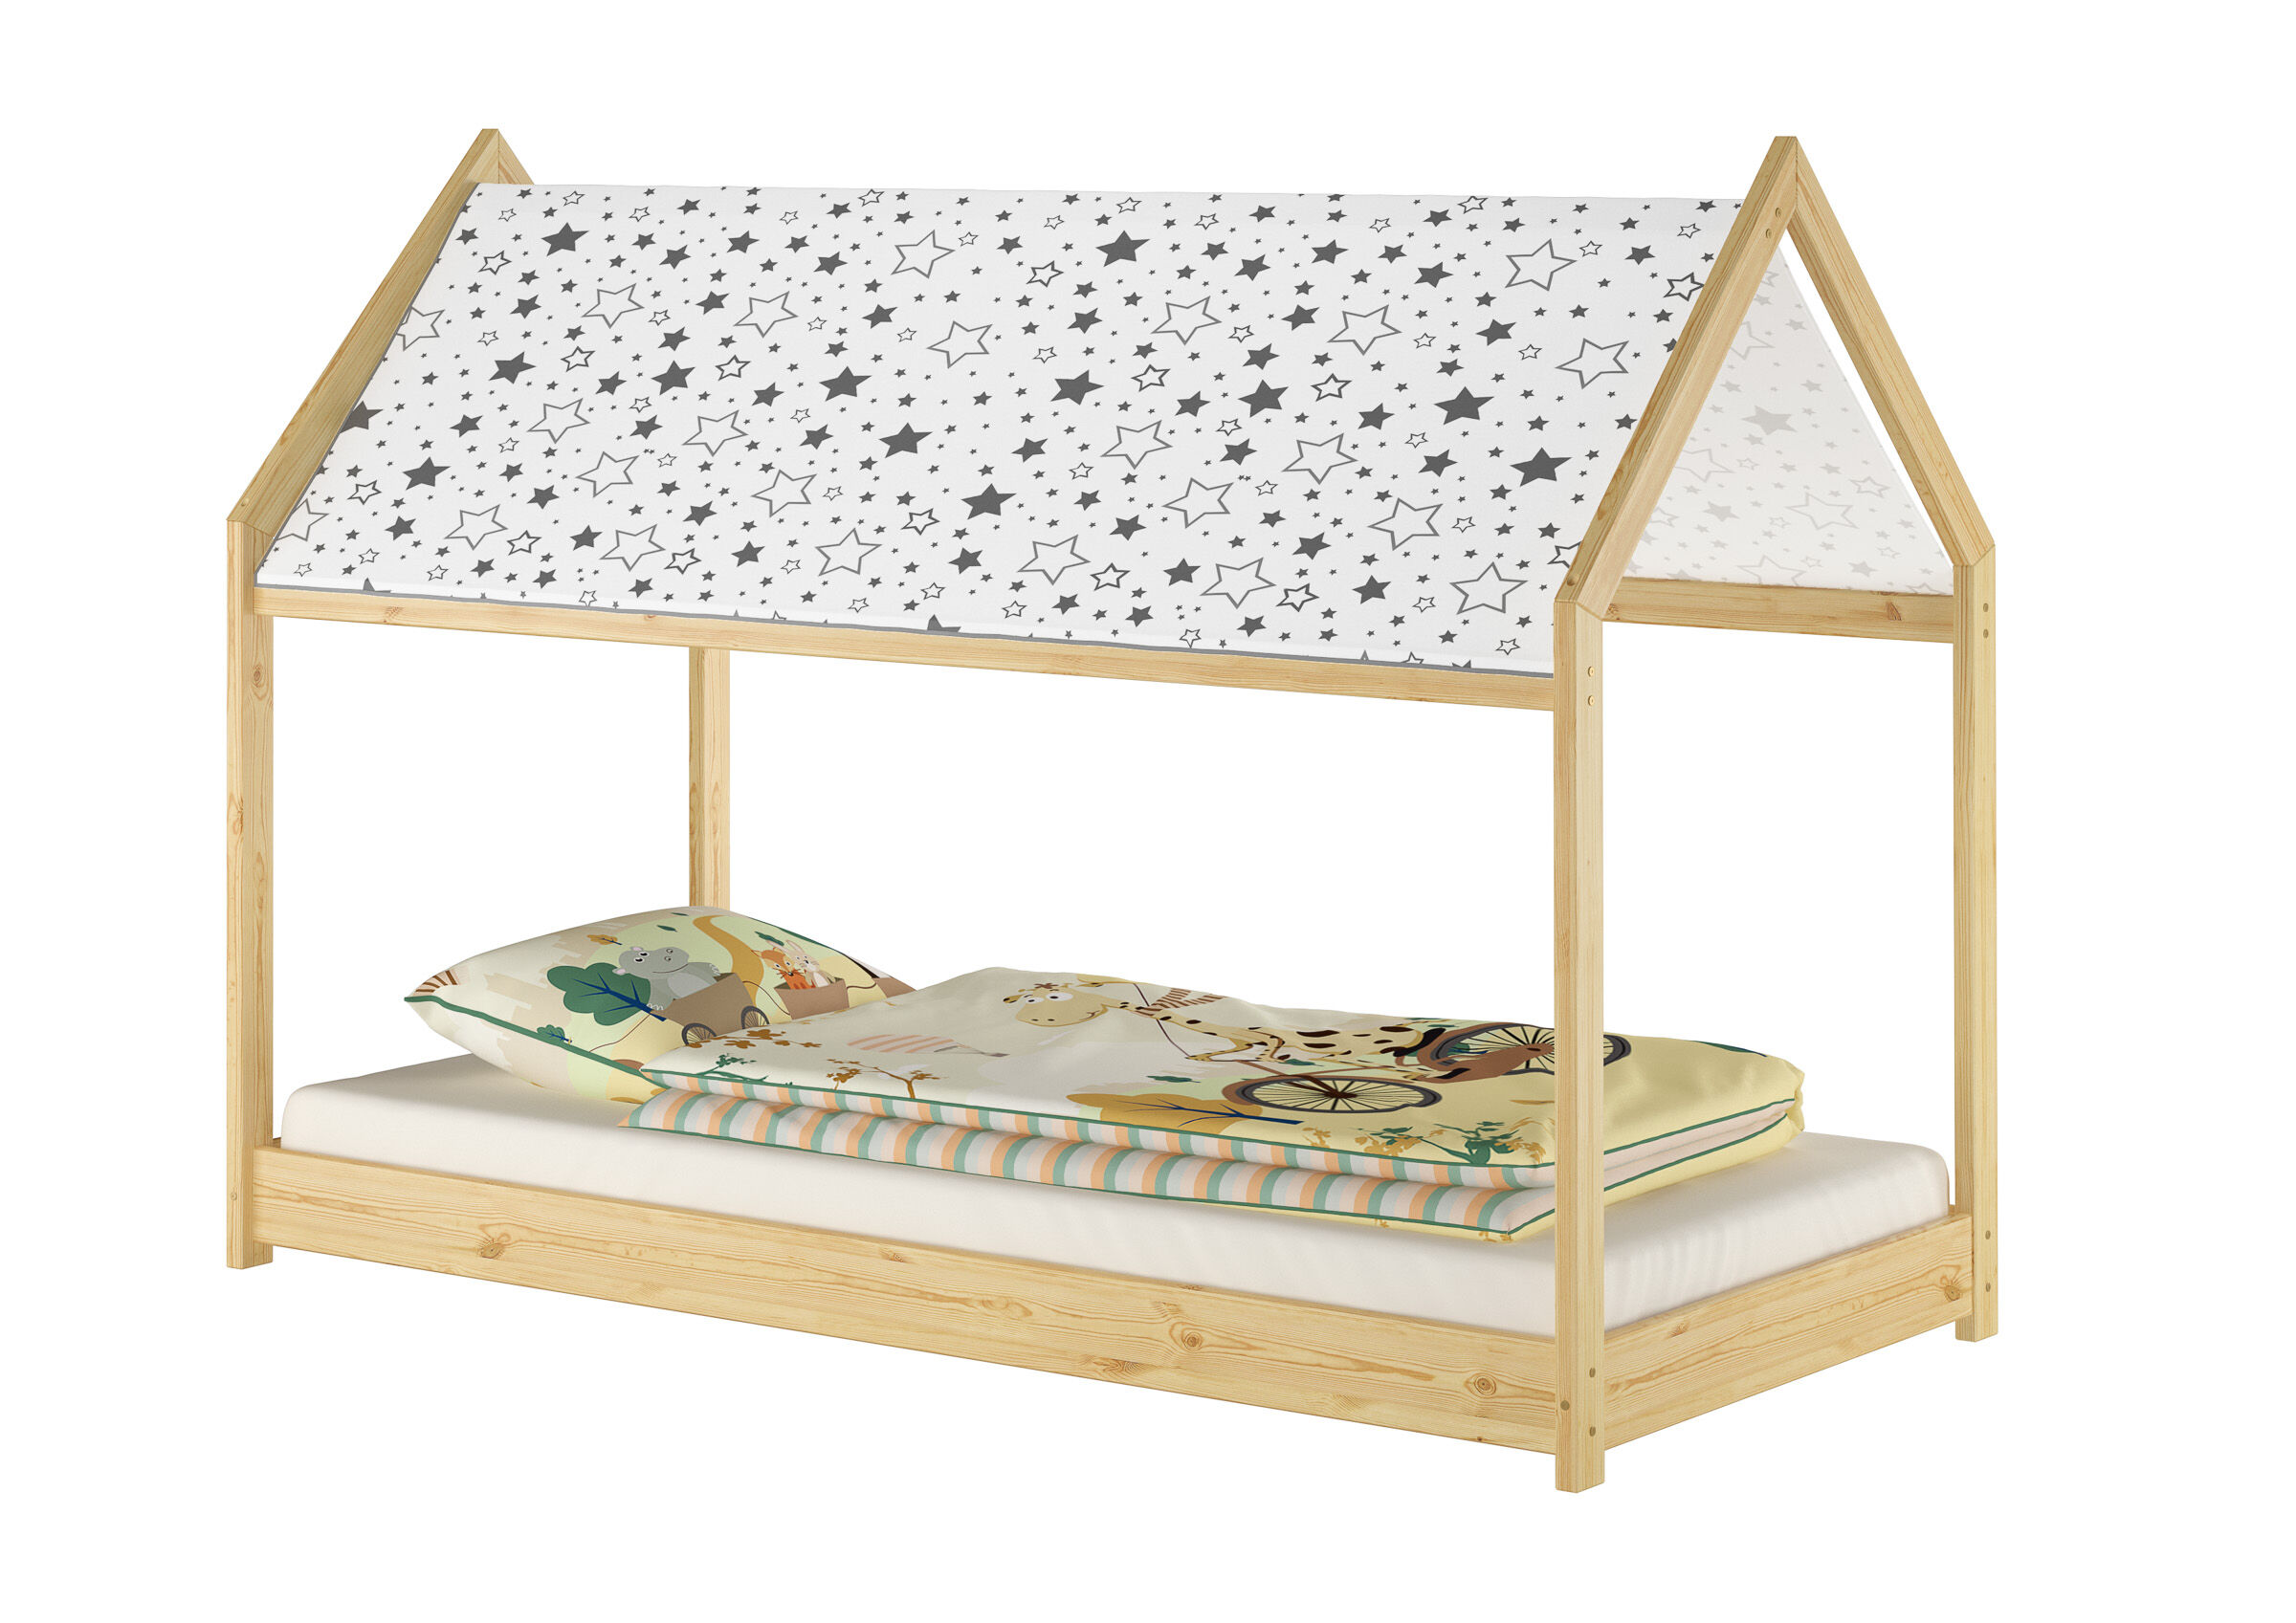 Kinderbett mit Dach in Sternenoptik